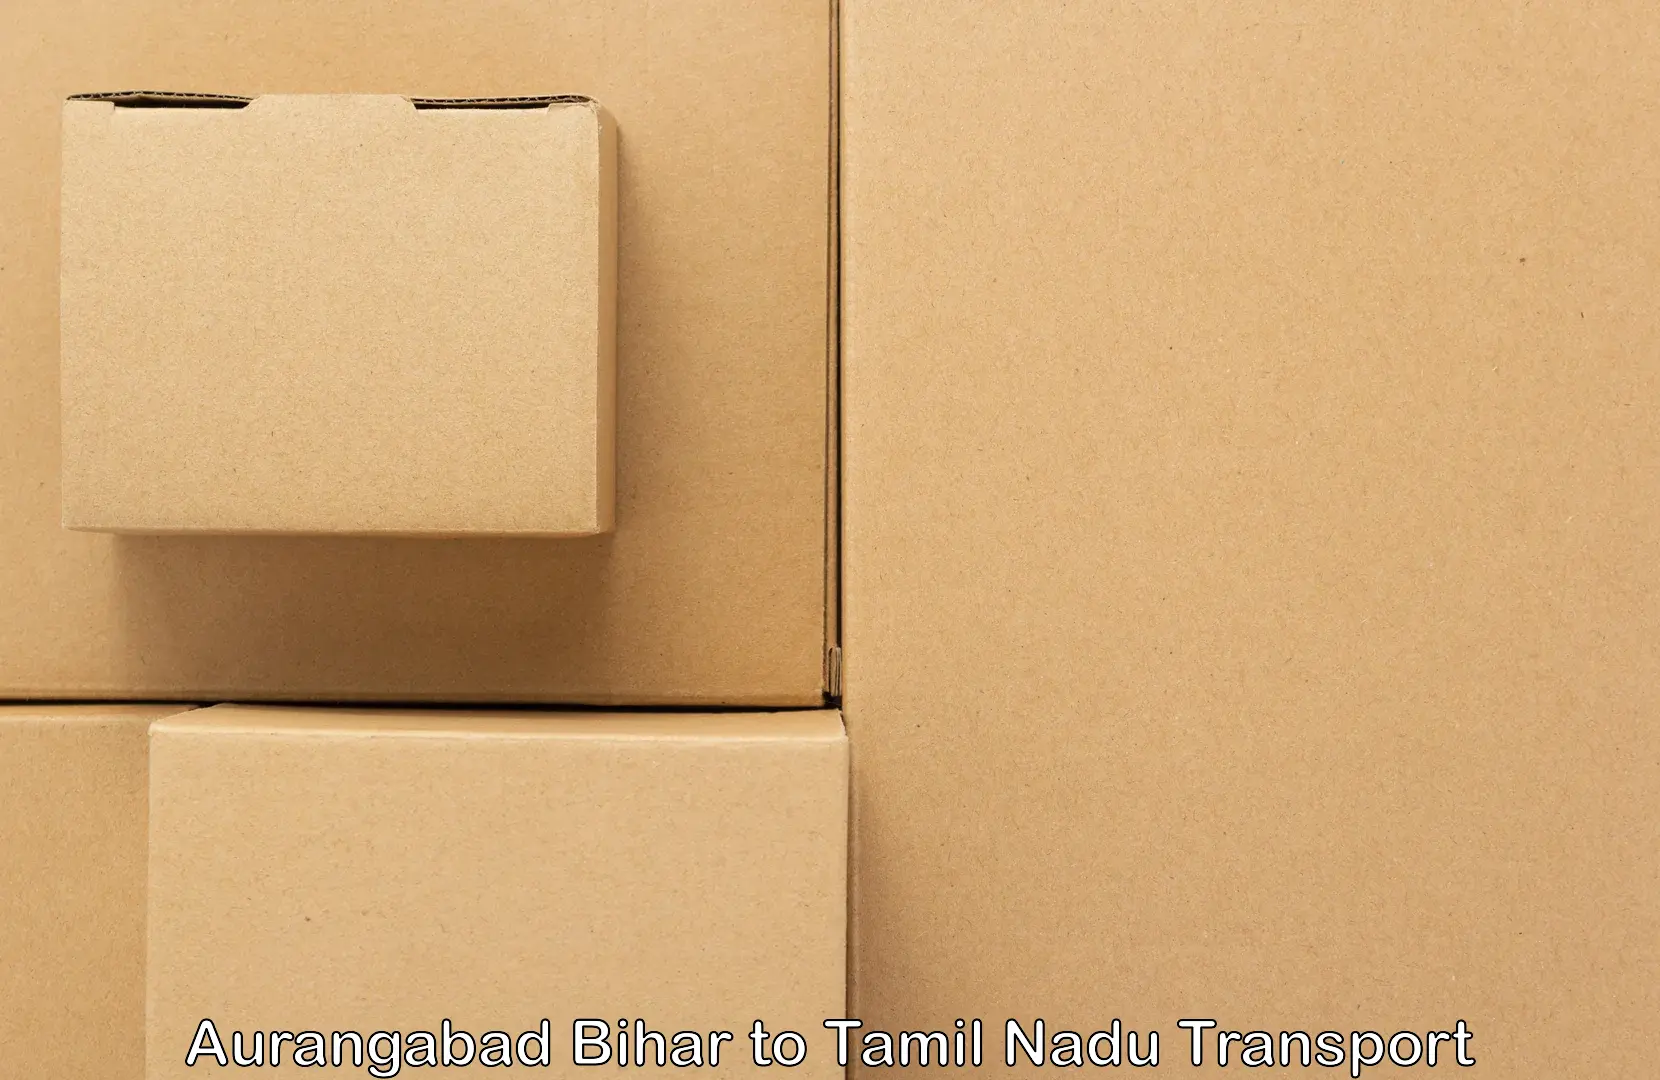 Delivery service Aurangabad Bihar to Tindivanam